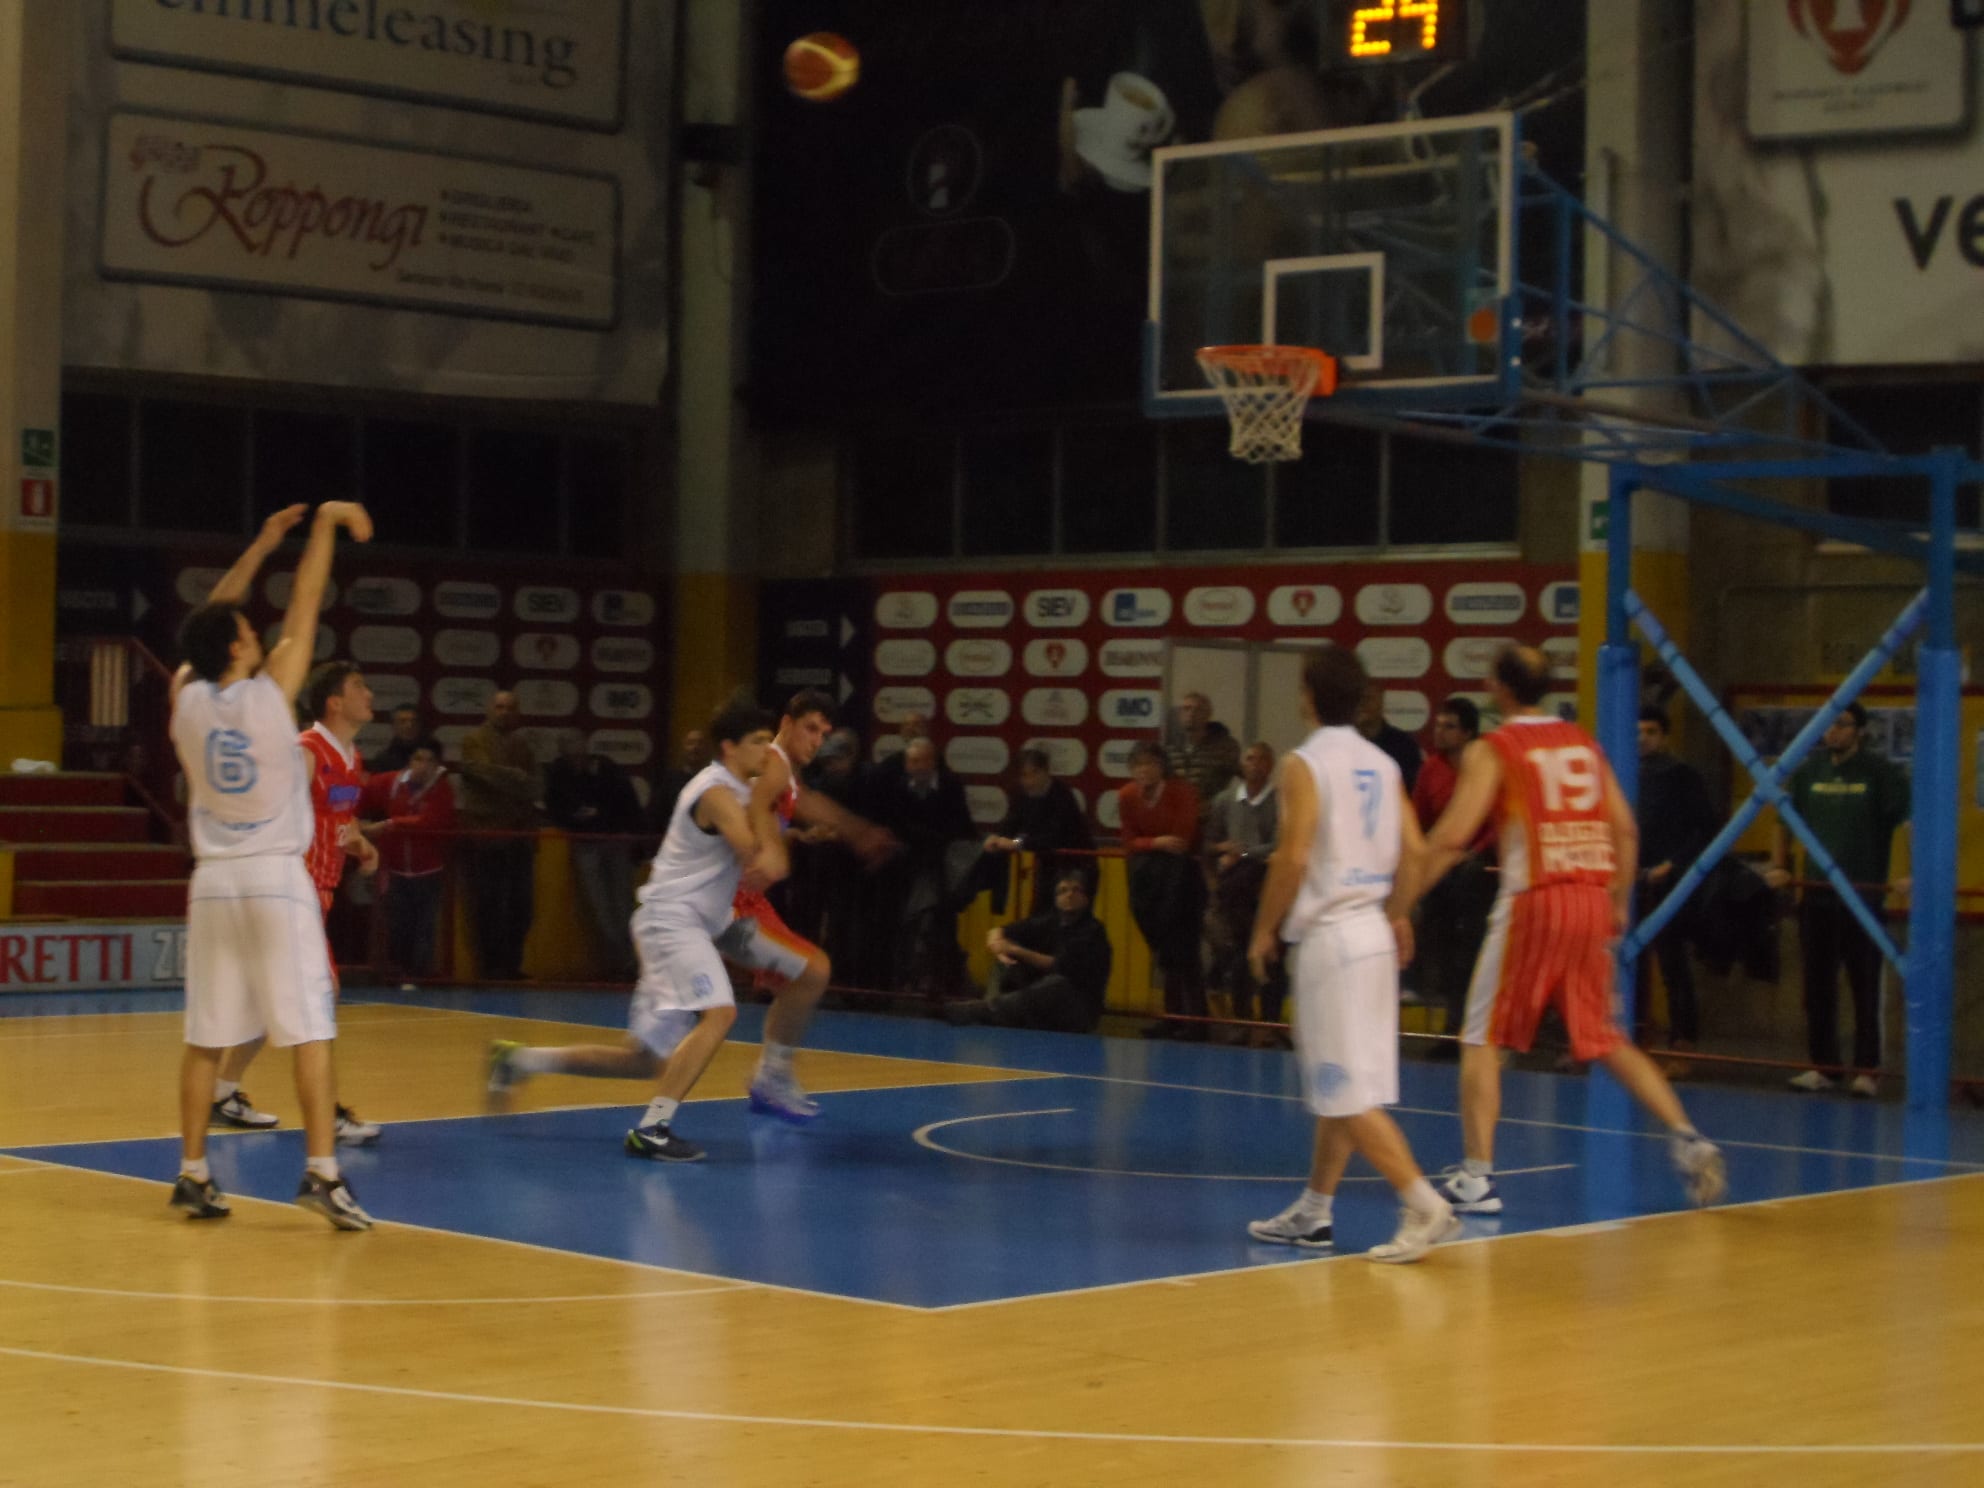 Basket Dnc: Saronno valanga su Reggio Emilia